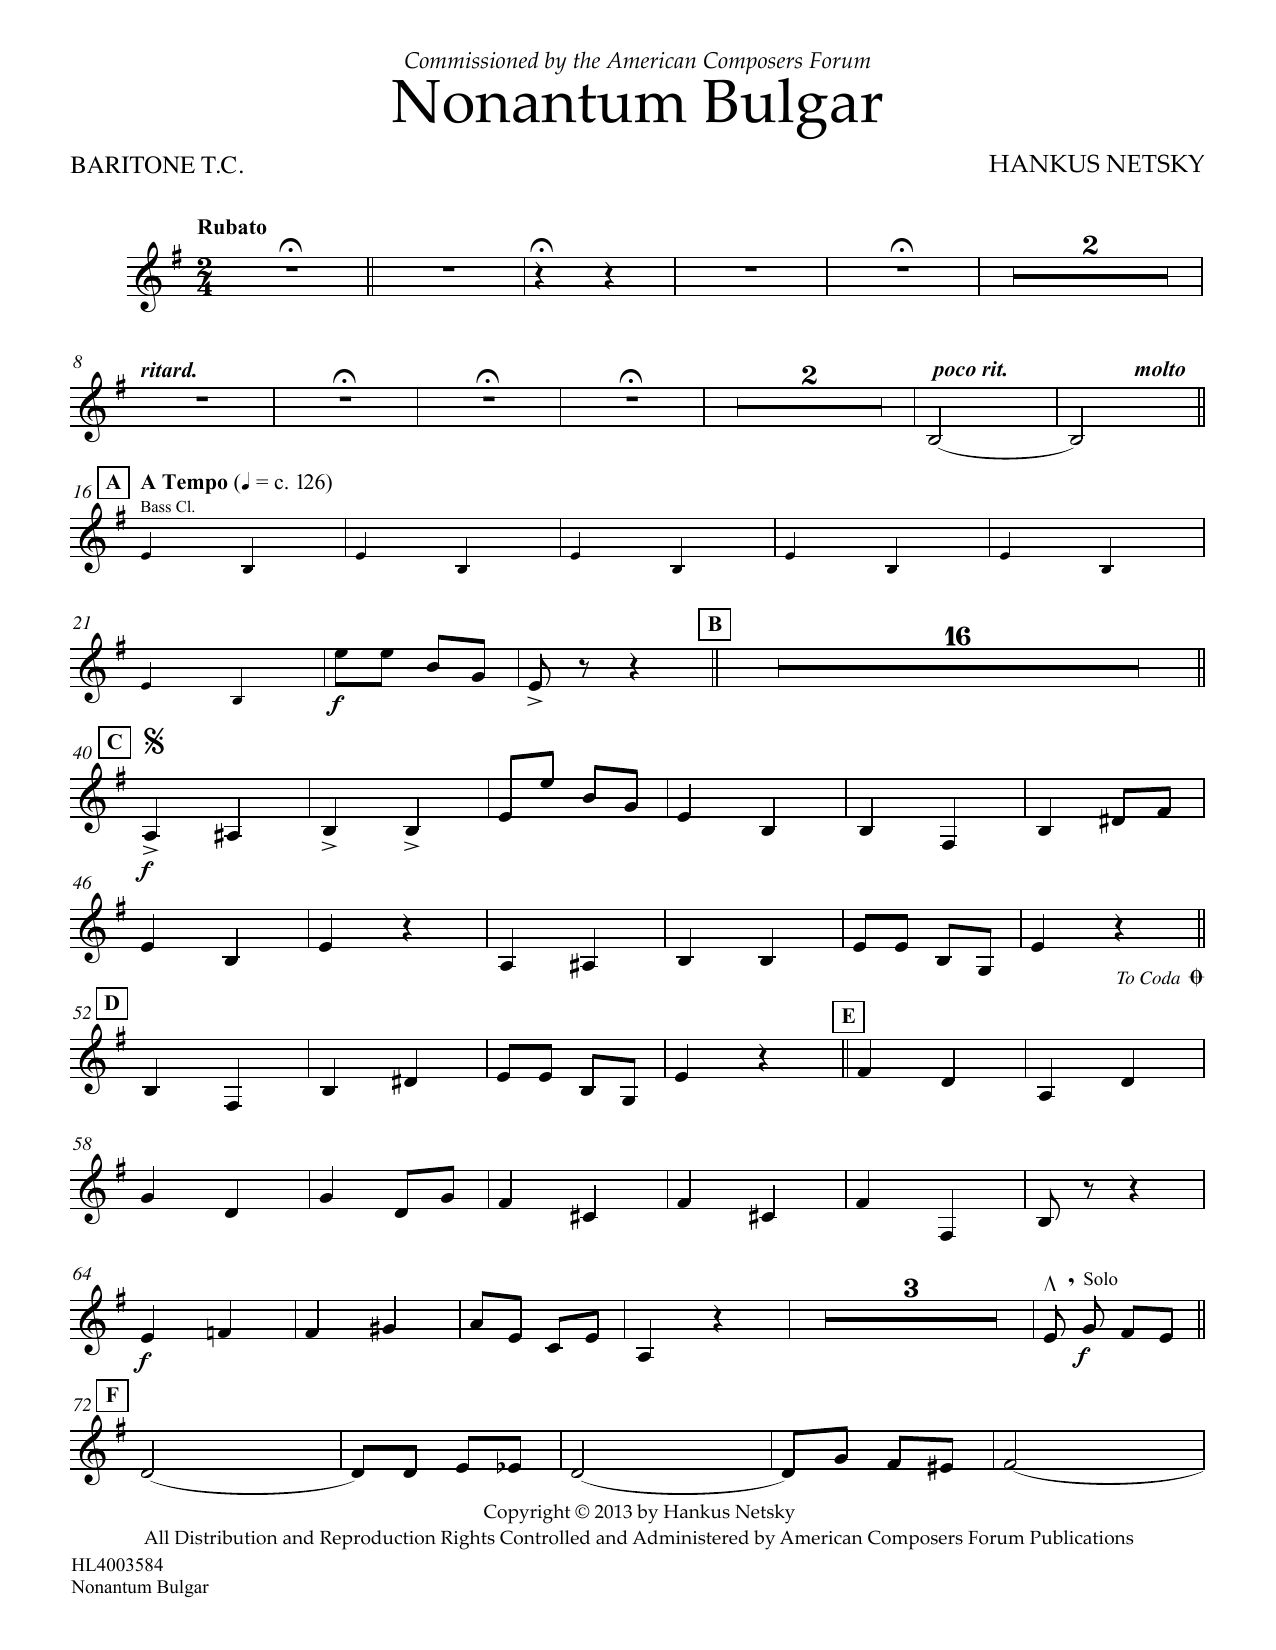 Hankus Netsky Nonantum Bulgar - Baritone T.C. Sheet Music Notes & Chords for Concert Band - Download or Print PDF